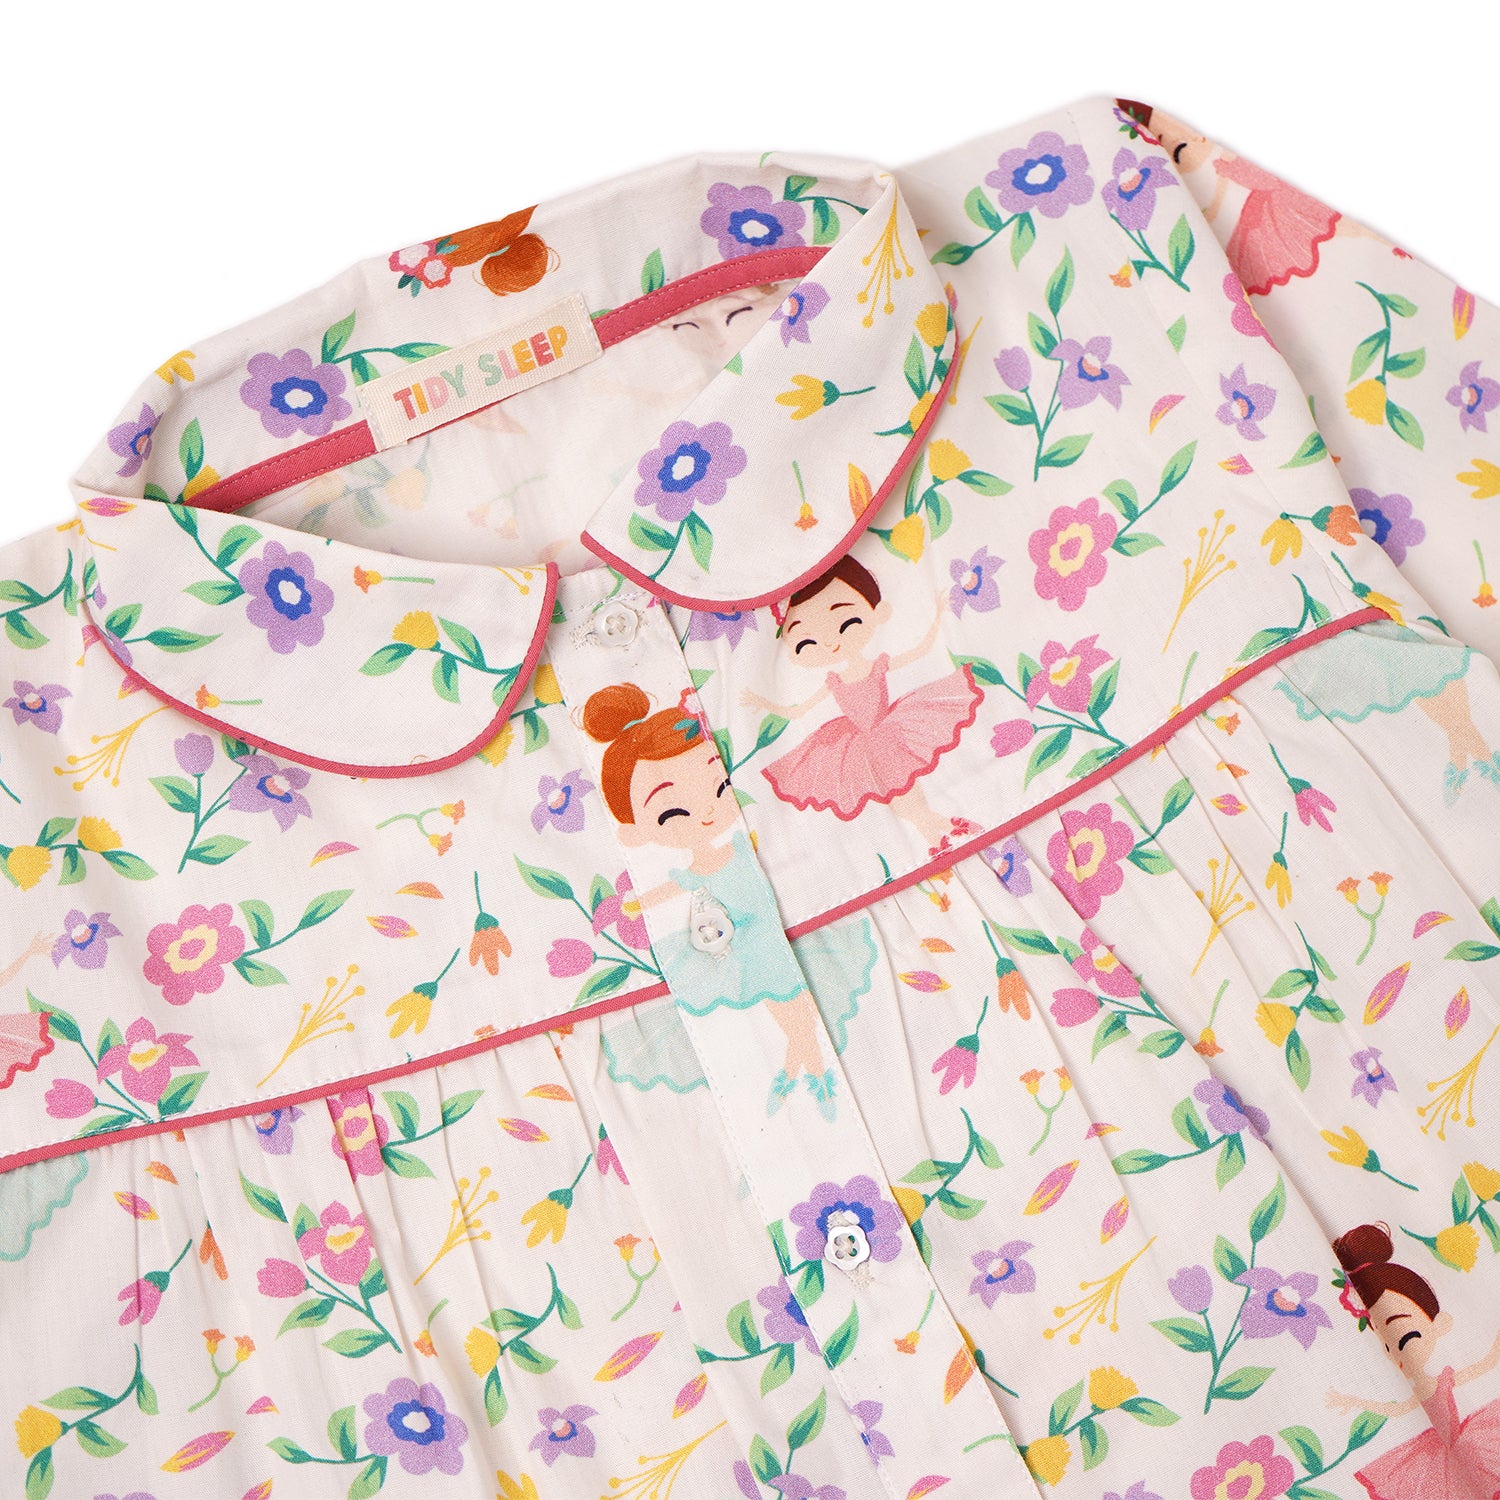 100% Cotton | Ballerina Print Baby Girls  Night Suit | Nightwear | Sleepwear for Baby/Kids